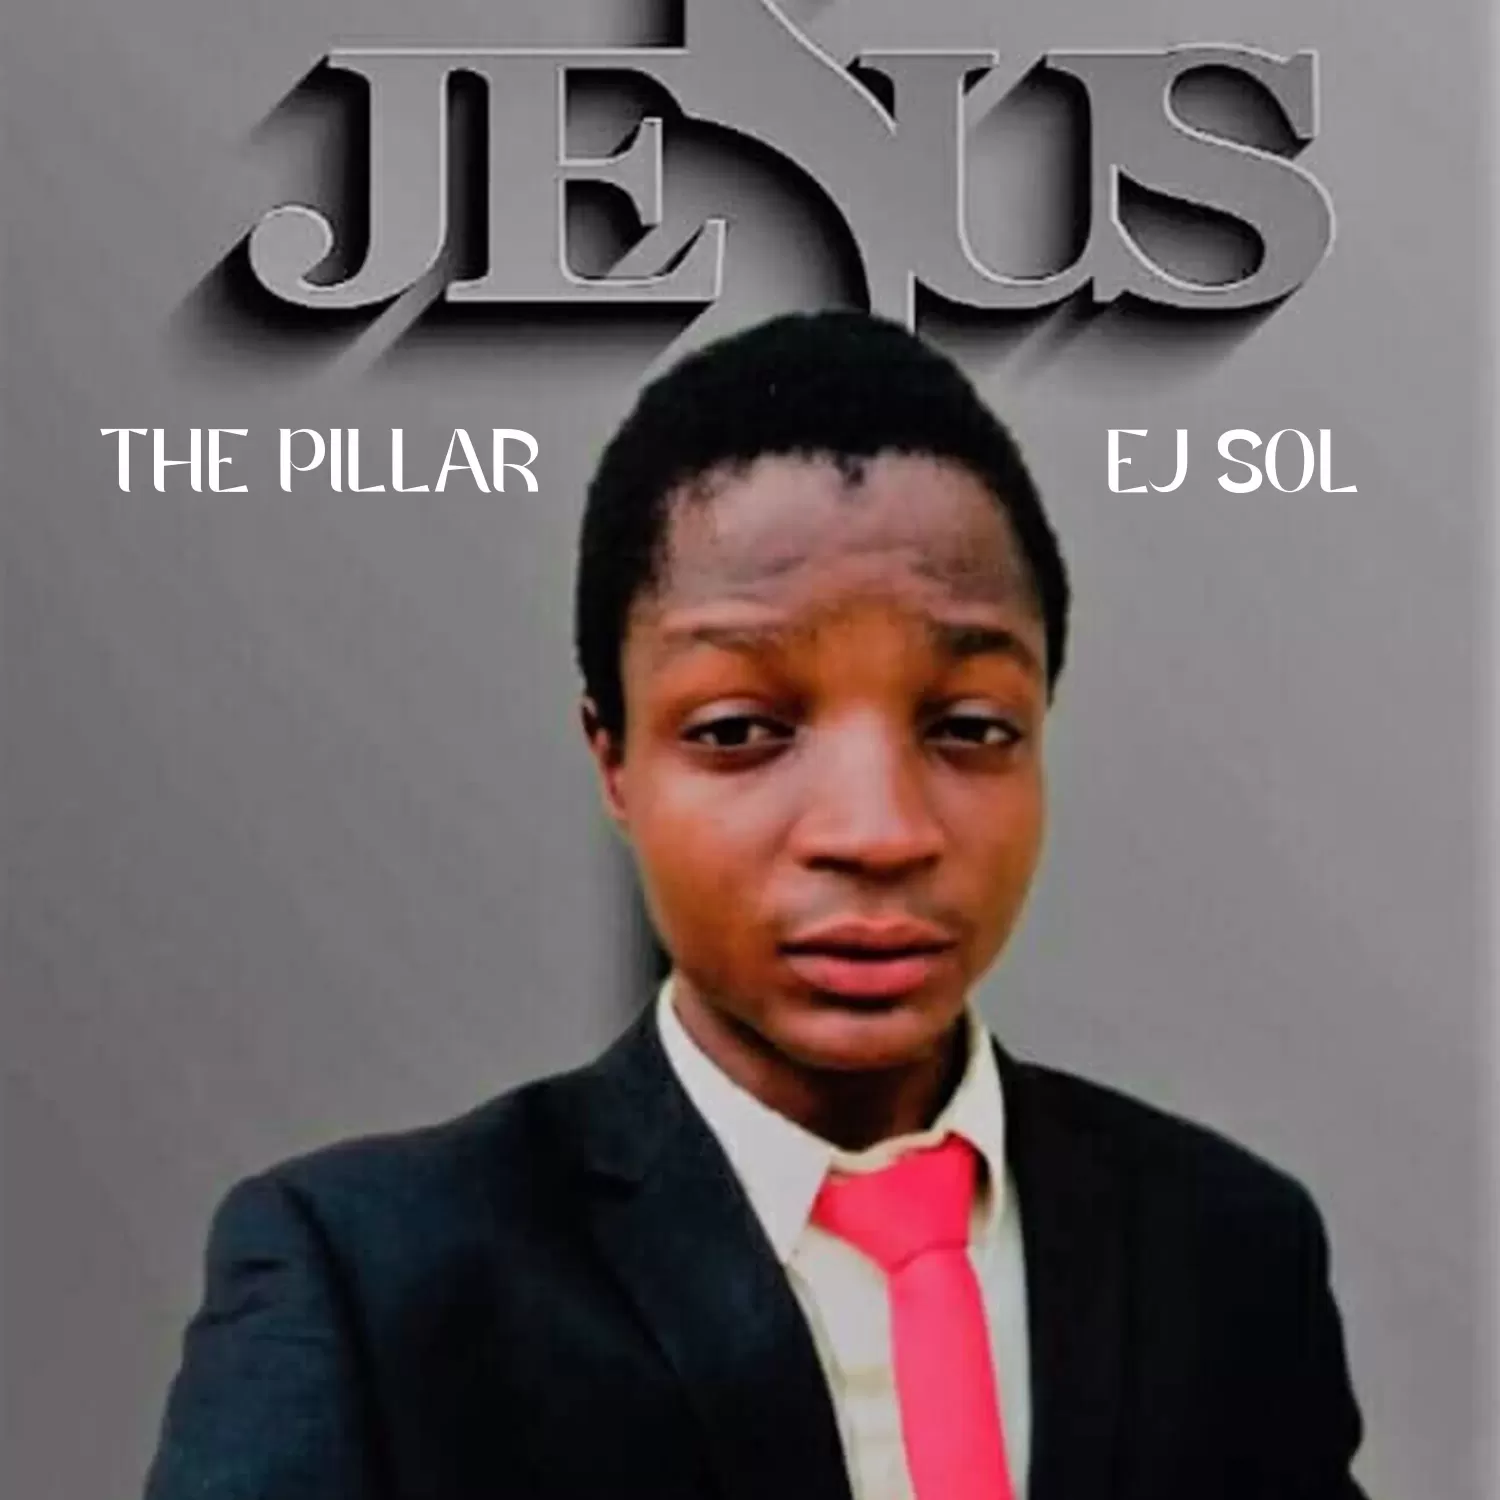 Jesus The Pillar by EJ SOL